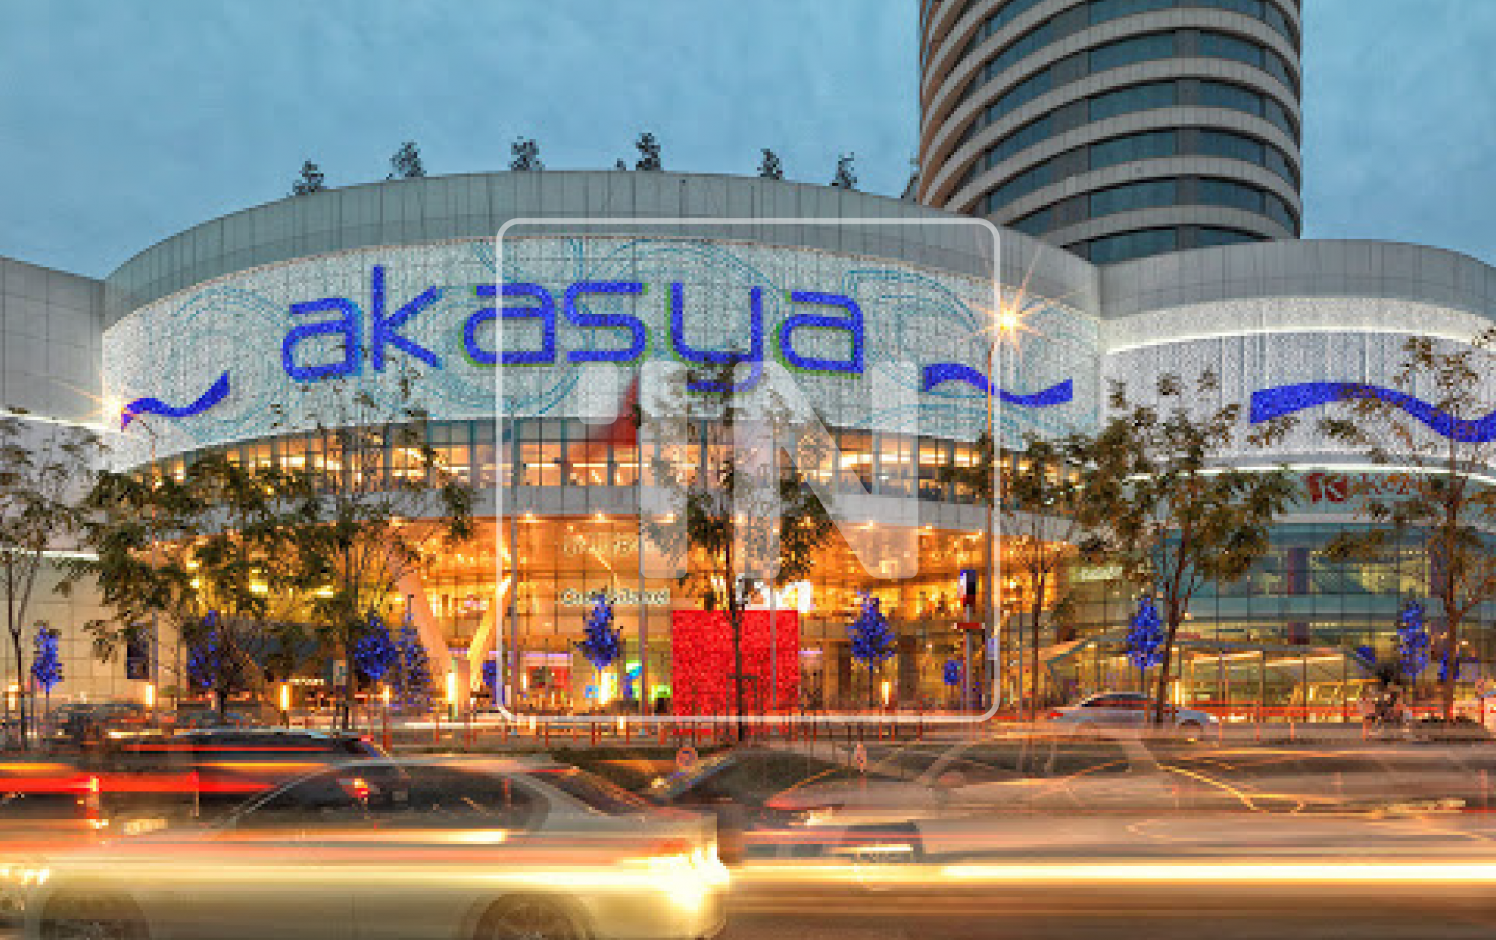 Akasya Shopping Center